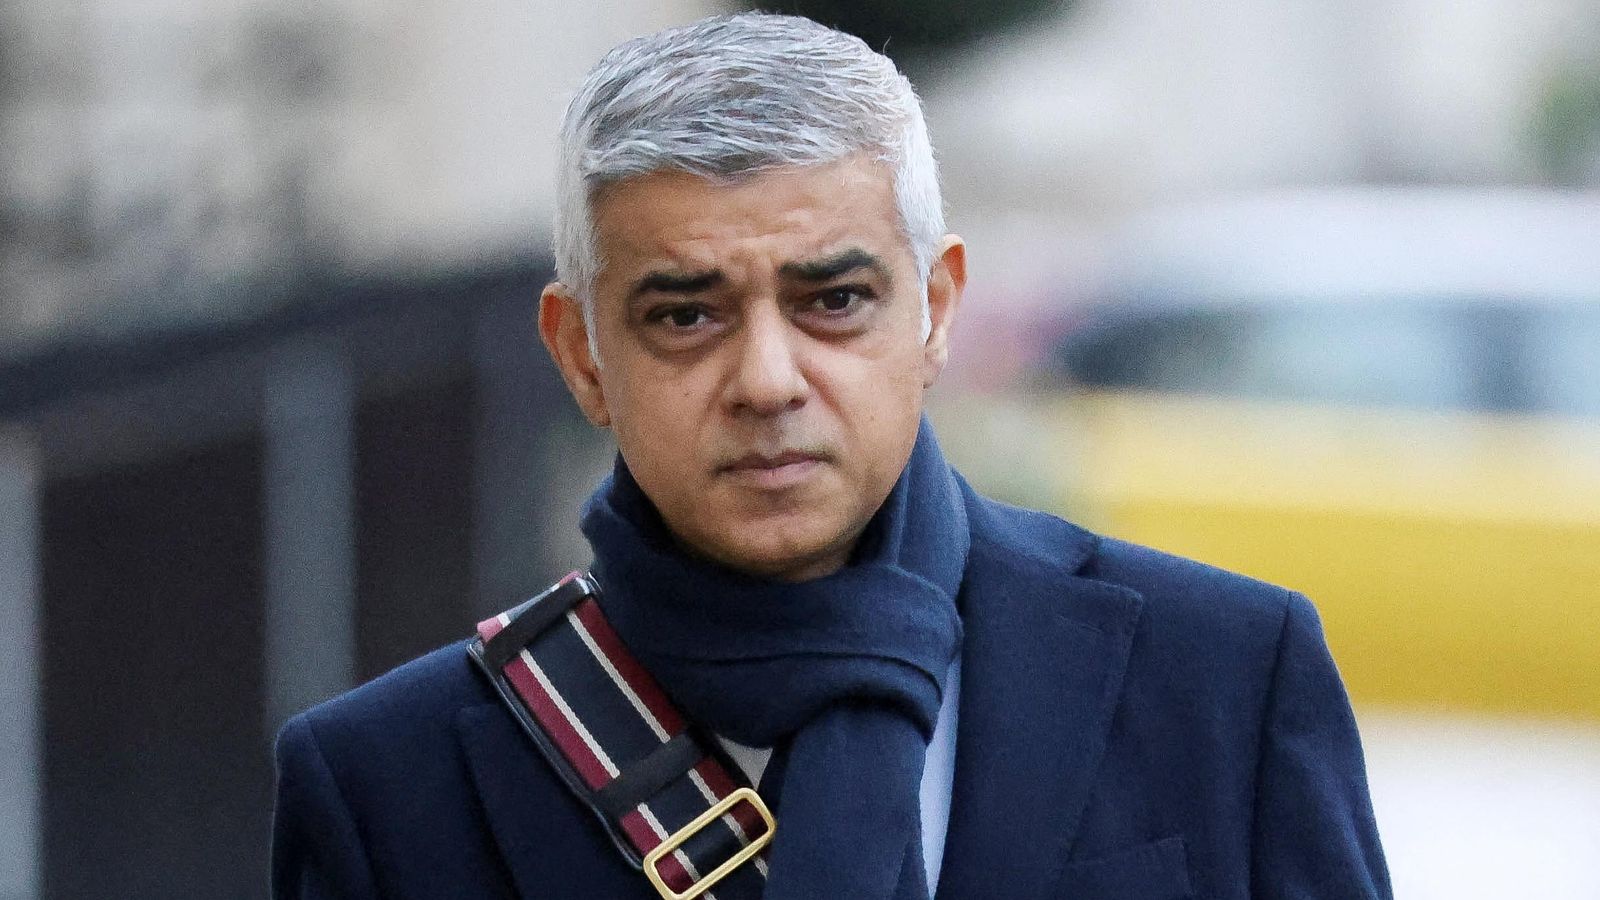 Mayor of London Sadiq Khan backs scheme to send 4x4s to Ukraine in apparent major U-turn